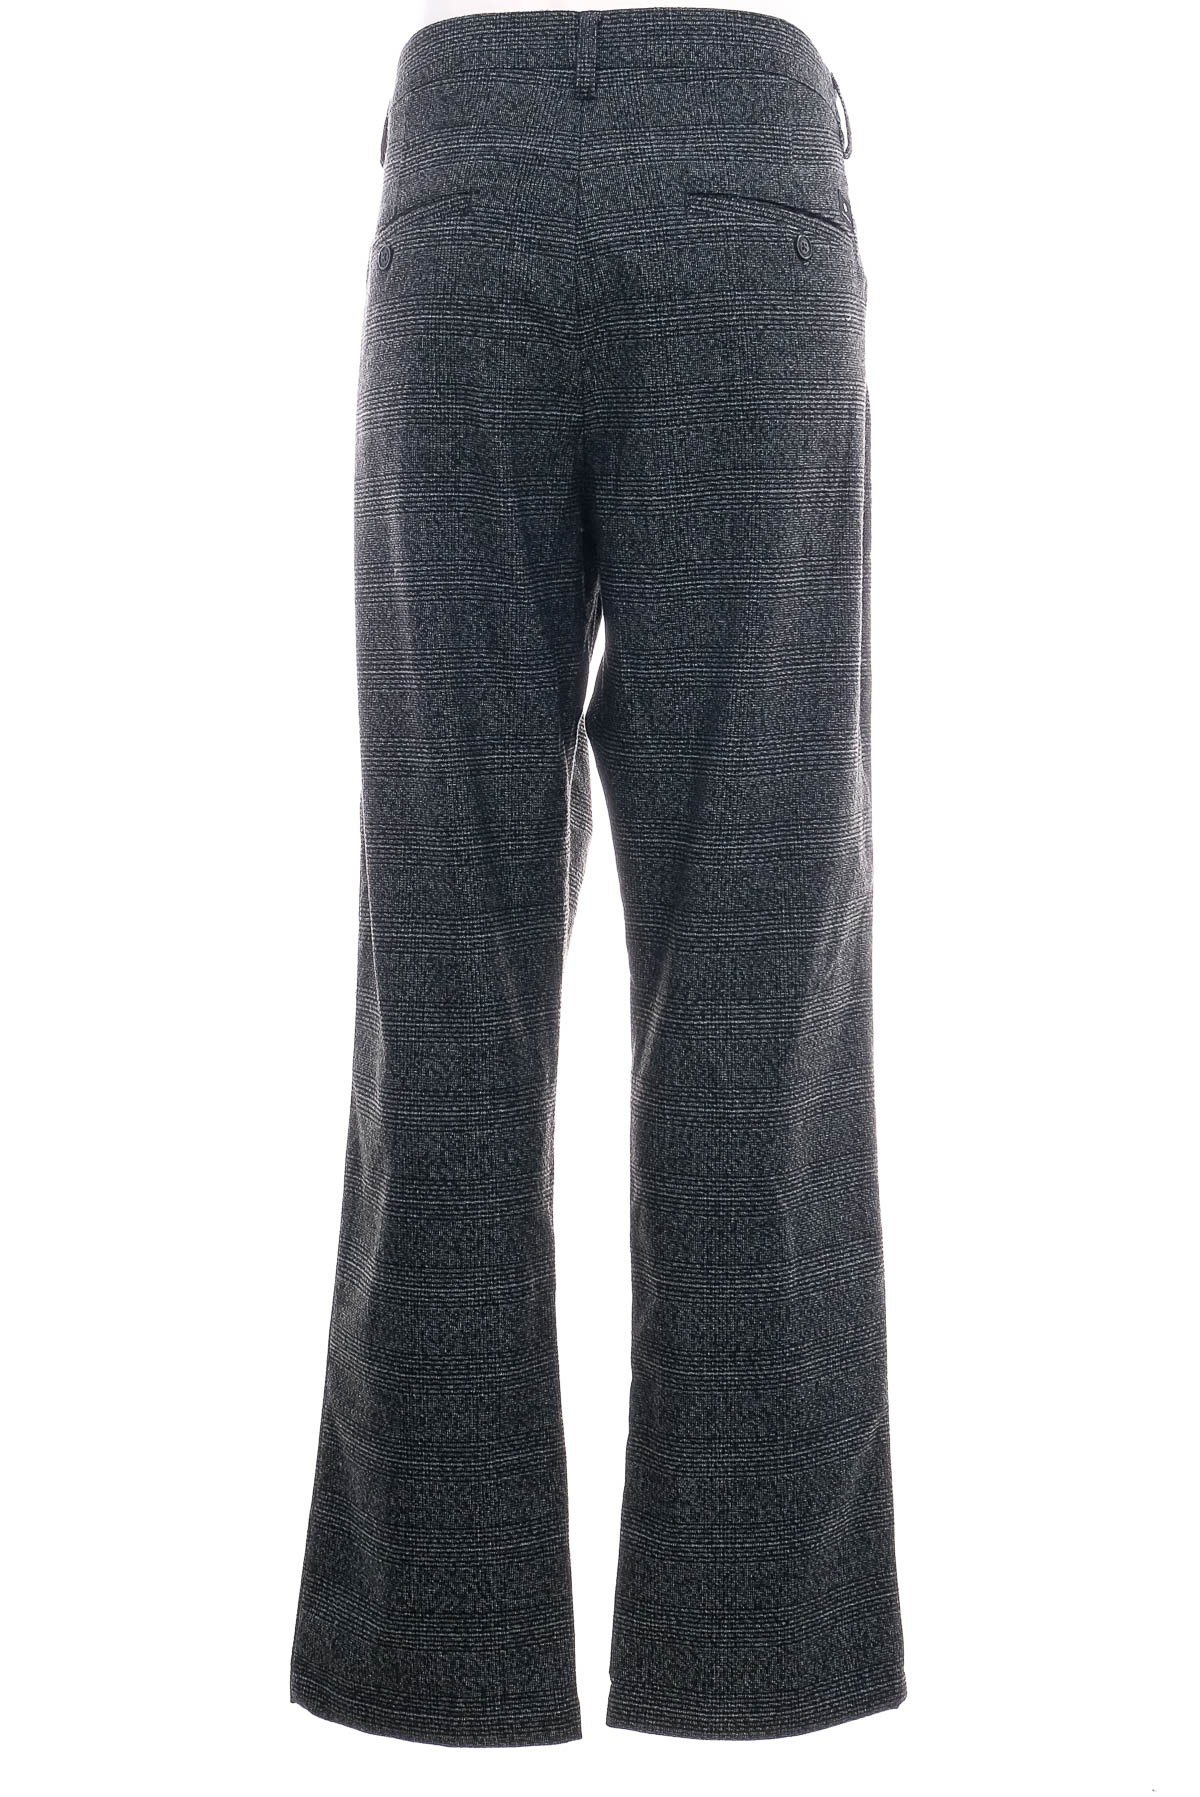 Pantalon pentru bărbați - QUARTERBACK by jbc - 1